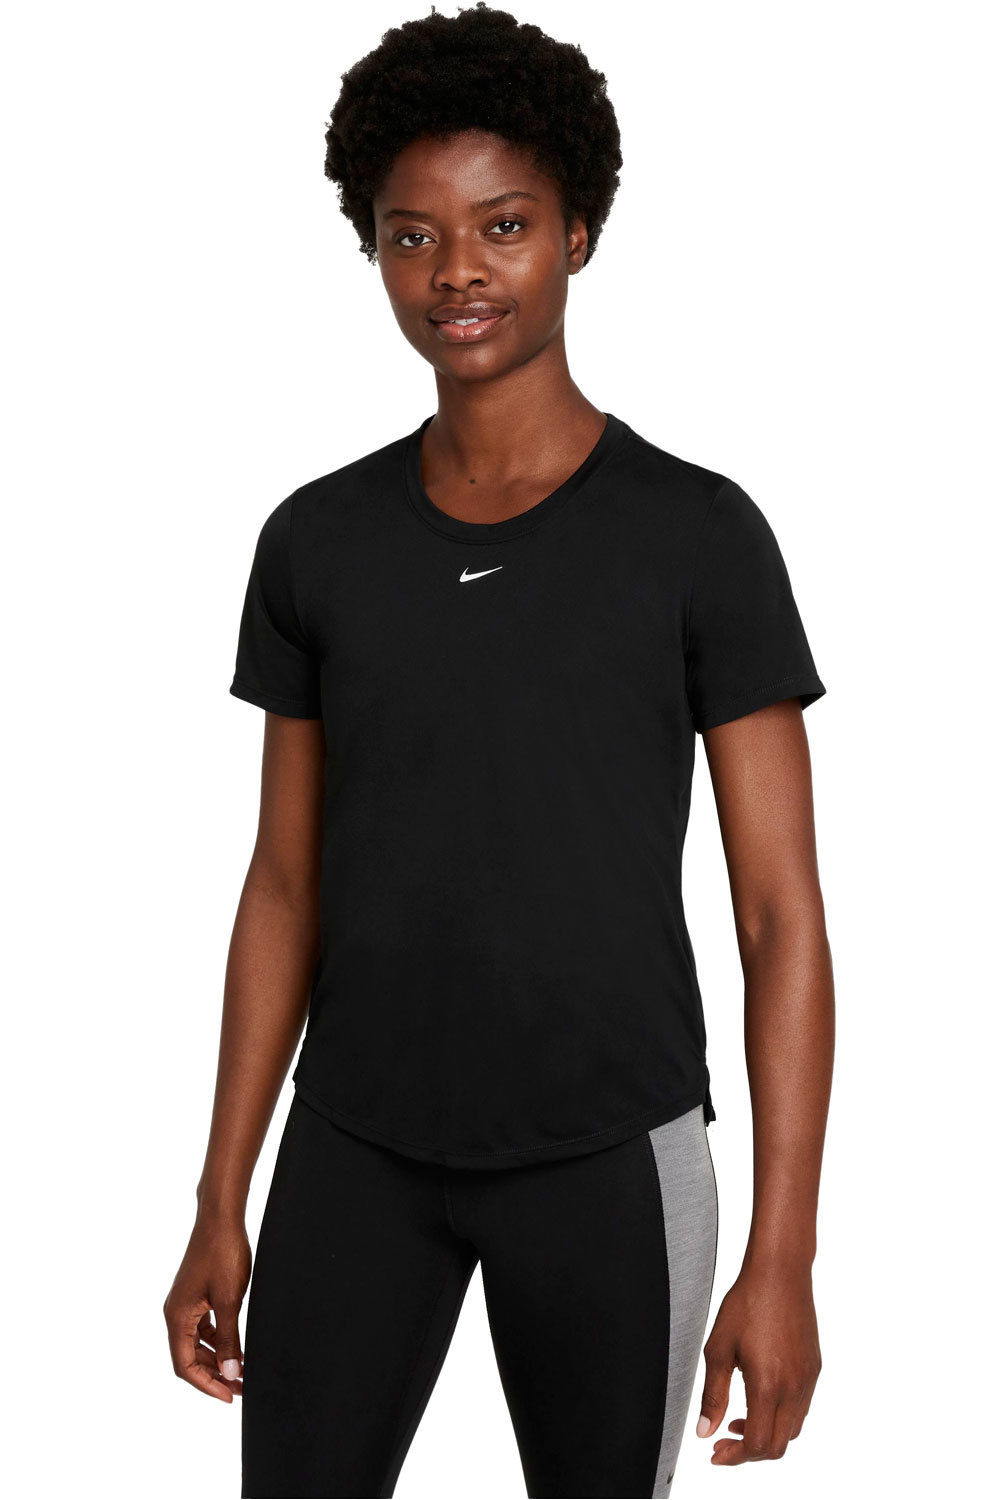 Nike camisetas fitness mujer ONE DF SS STD TOP vista frontal